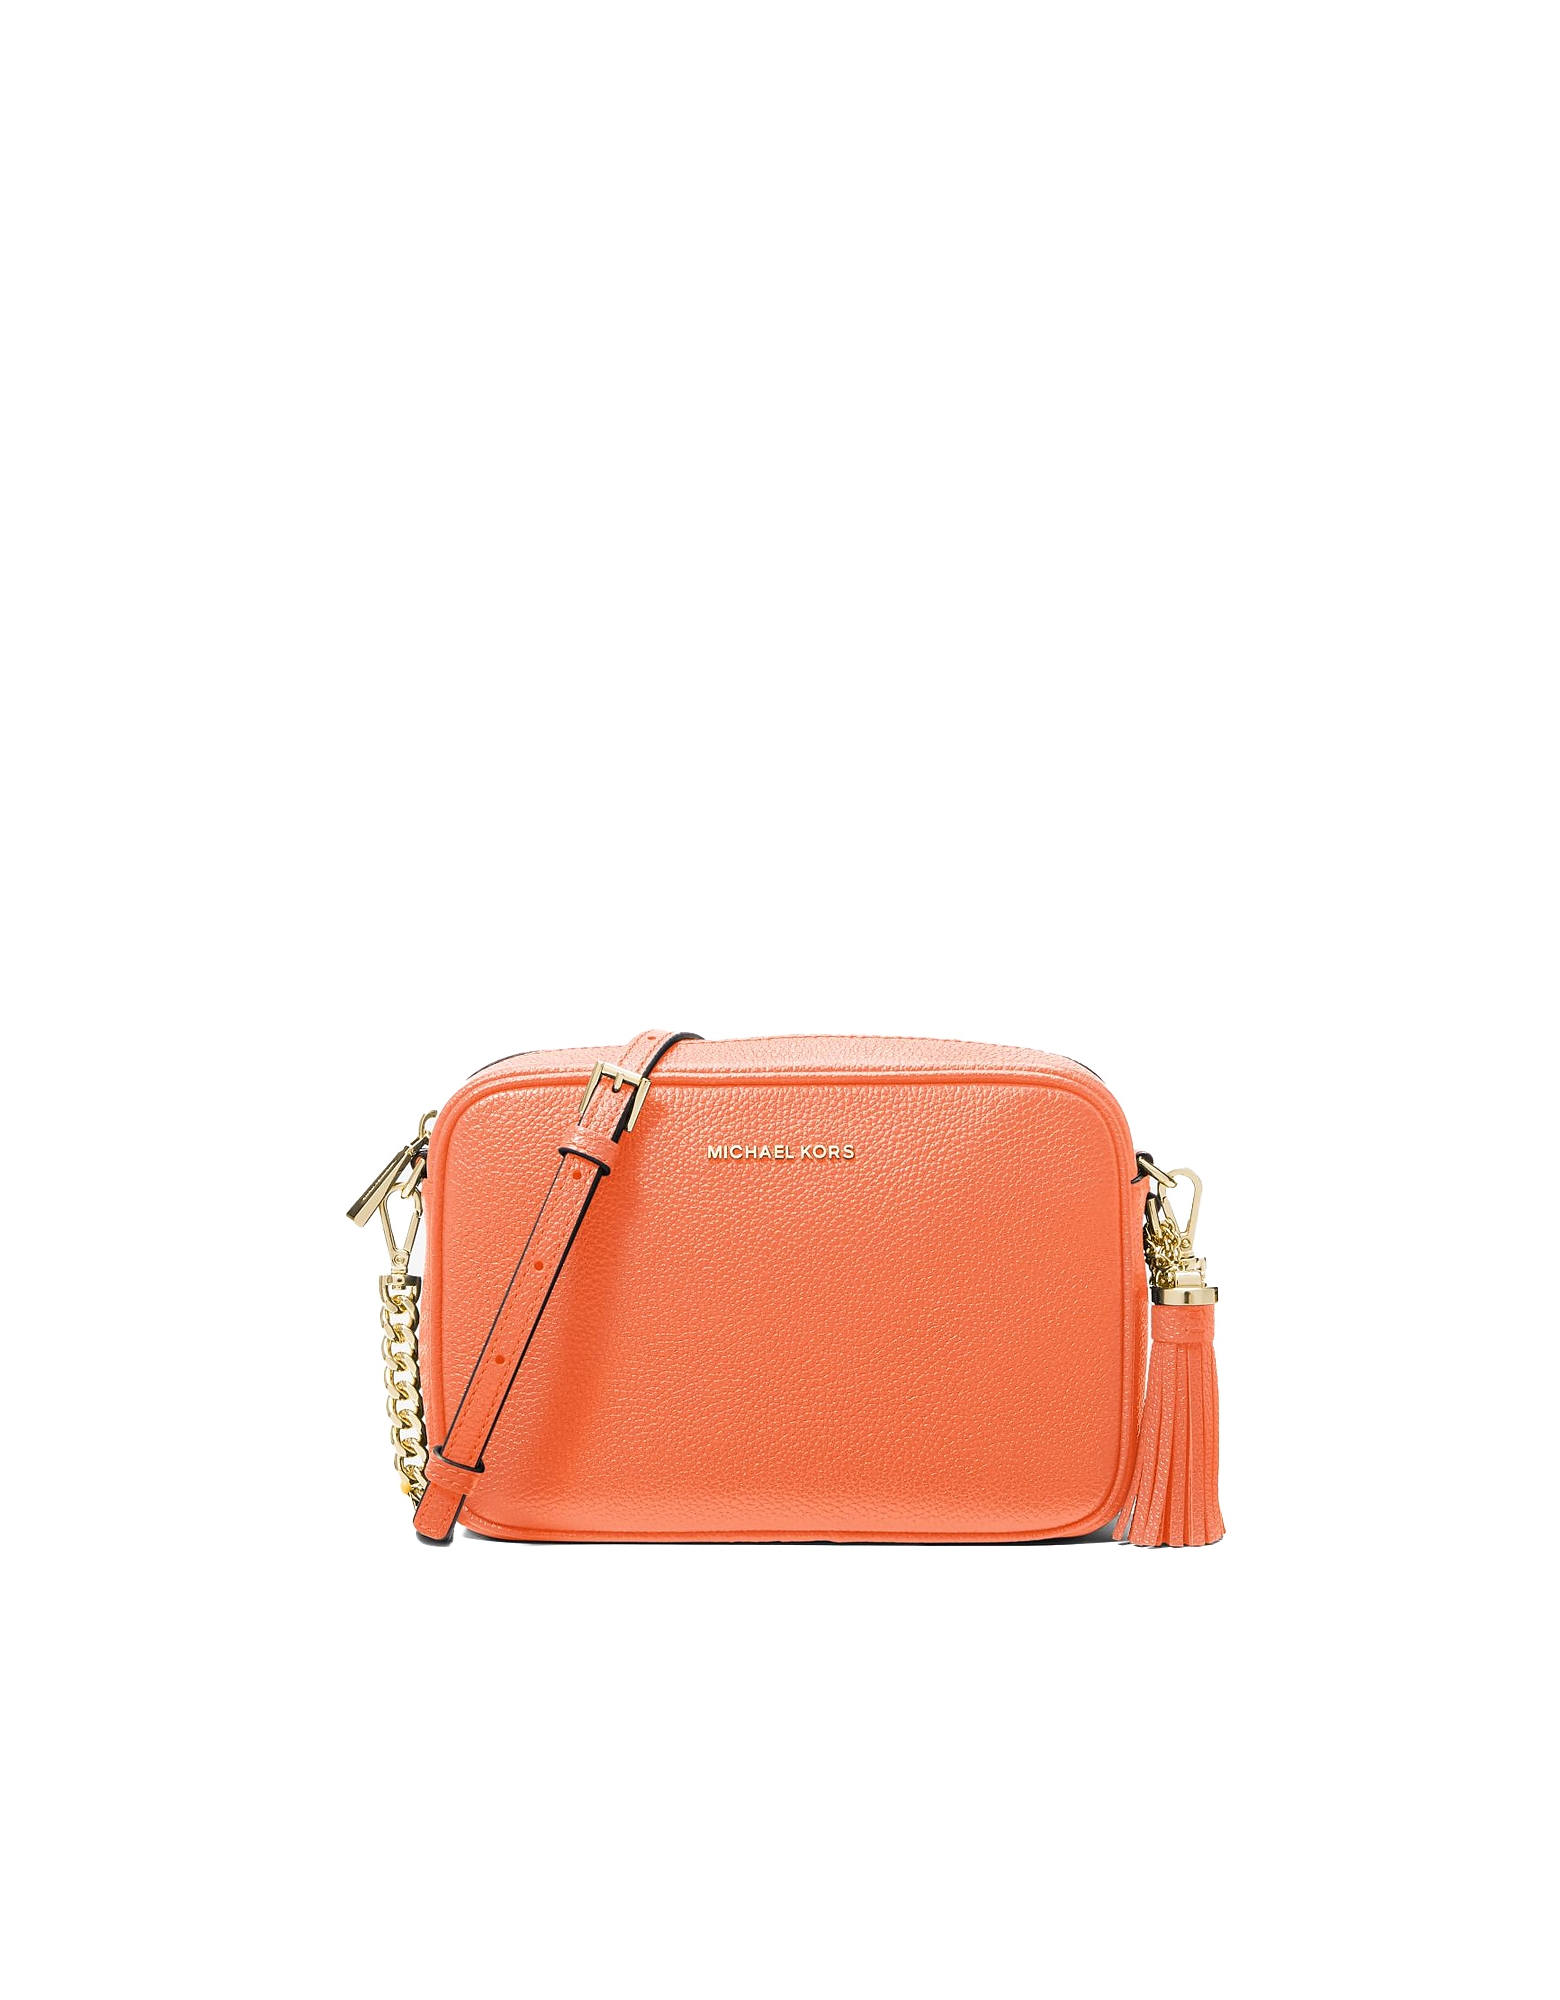 Michael Kors Designer Handbags Women's Orange Bag